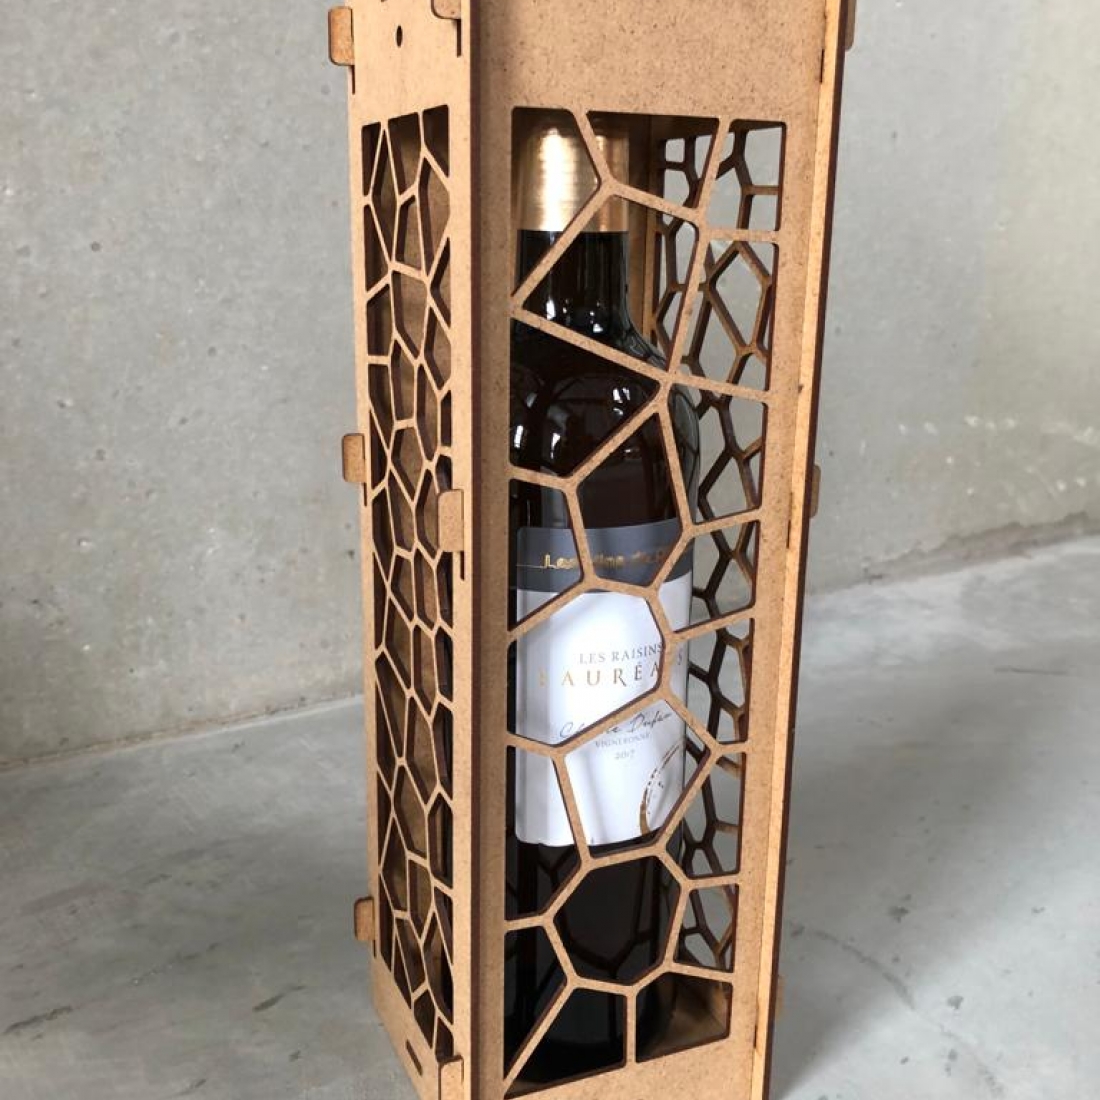 Wine crate